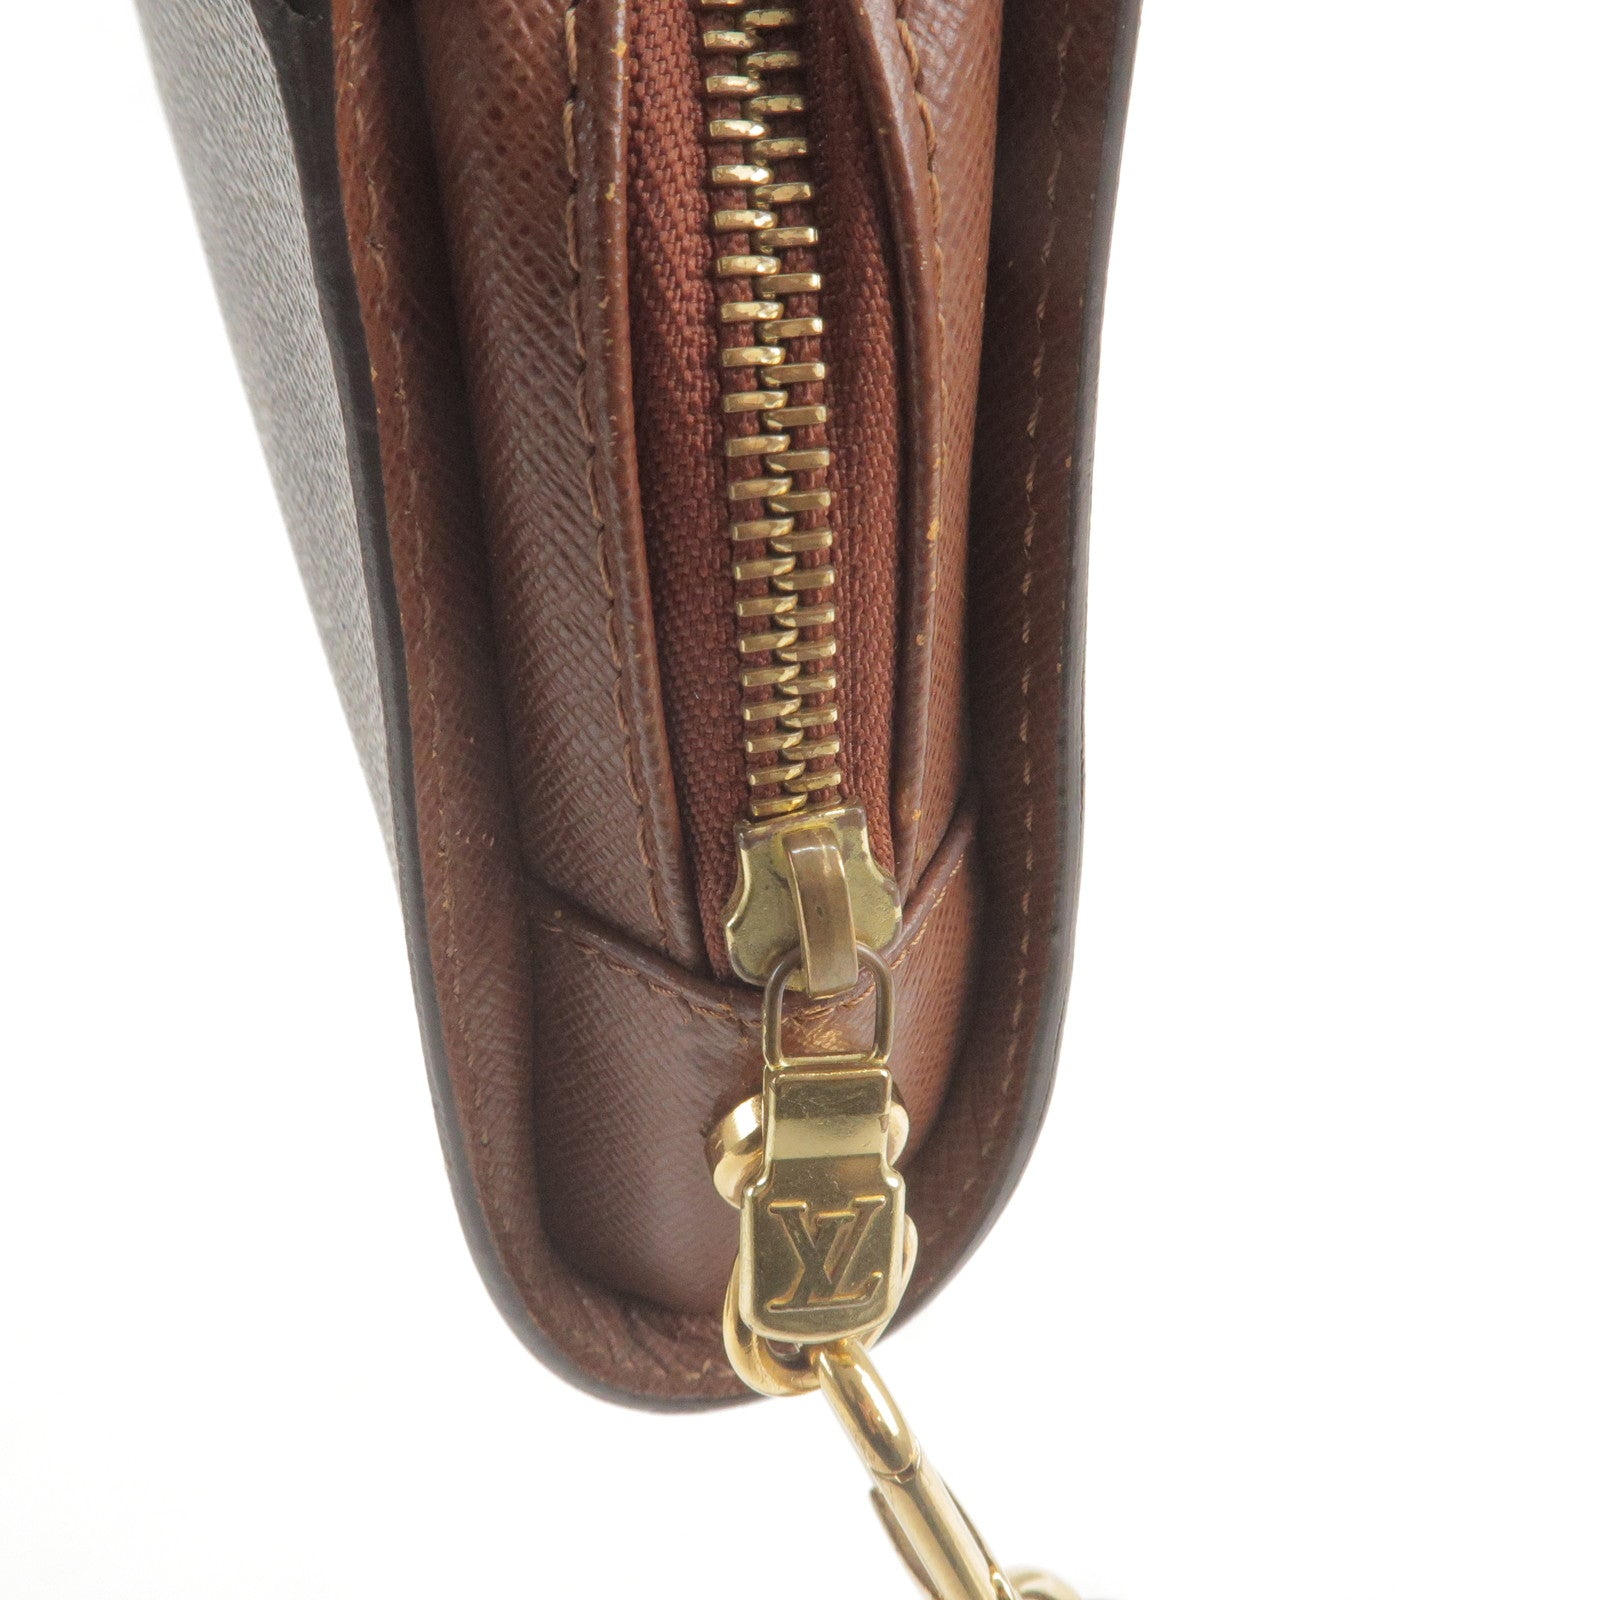 Louis Vuitton Classic Orsay Clutch Bag Pochette w/ Wrist Strap